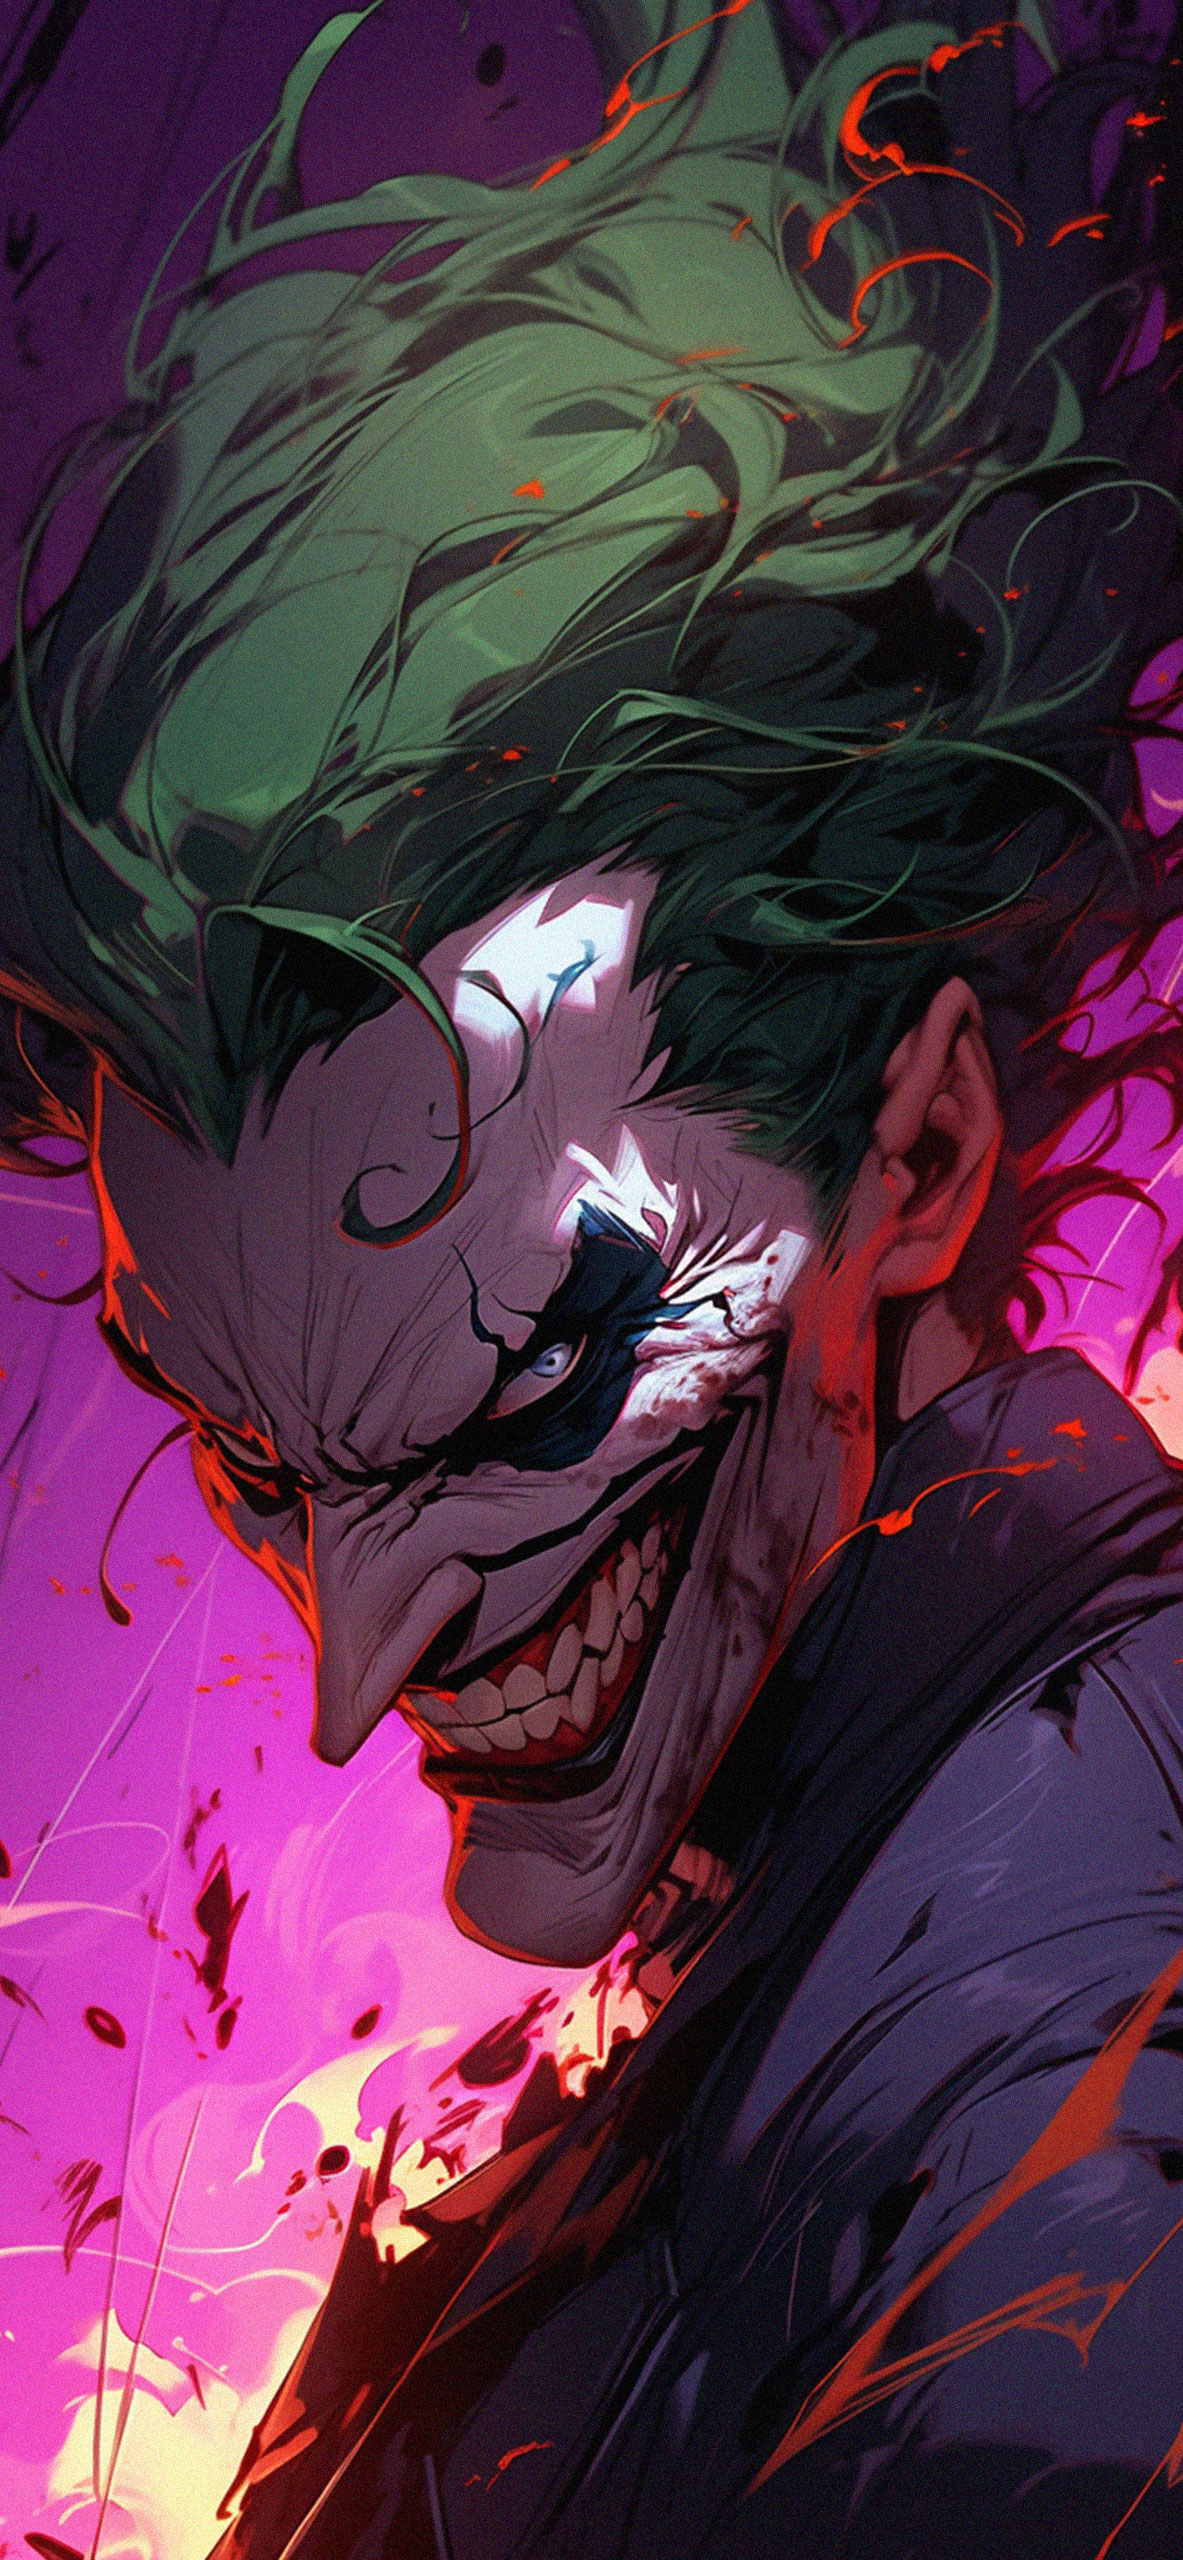 DC smilling joker art wallpaper DC comics villain aesthetic wa